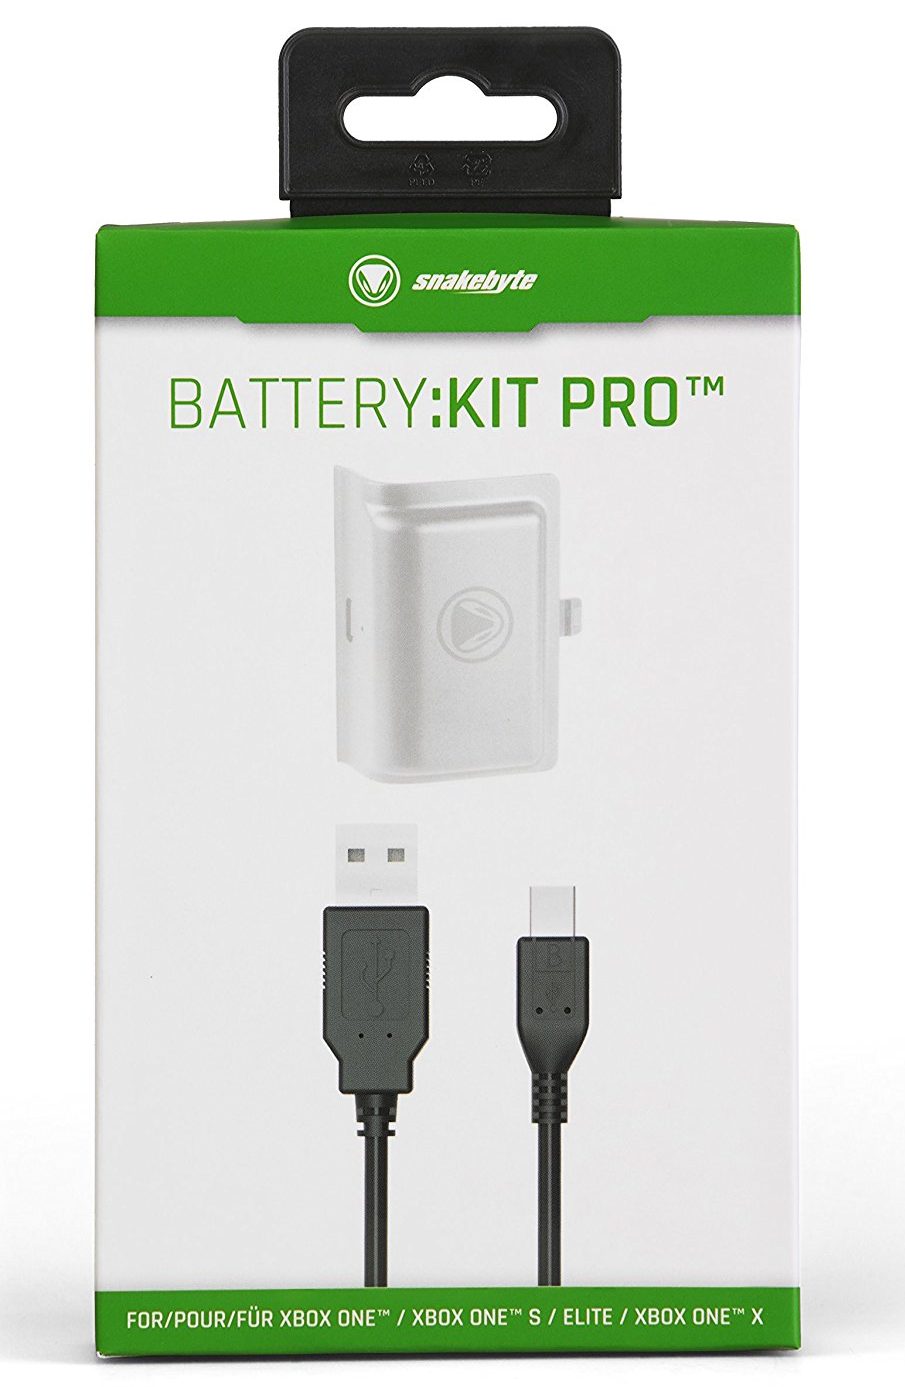 White Snakebyte Xbox One Battery Kit Pro boxed